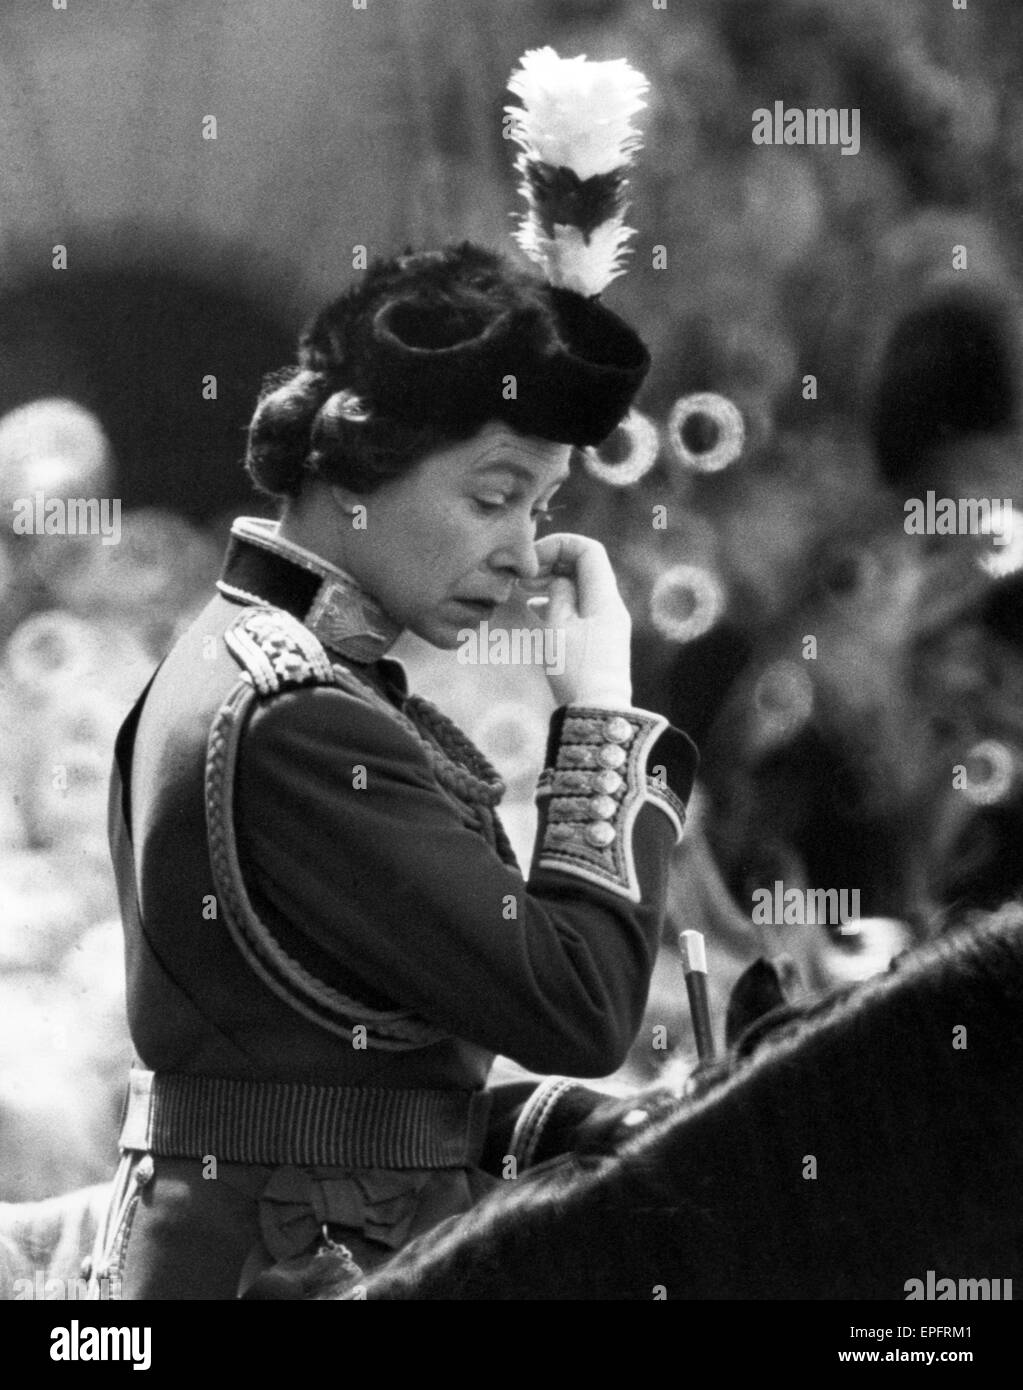 Die Königin nimmt Teil an Trooping die Farbe Zeremonie mit dem 1. Bataillon Welsh Guards, Horse Guards Parade, London, 2. Juni 1973. Stockfoto